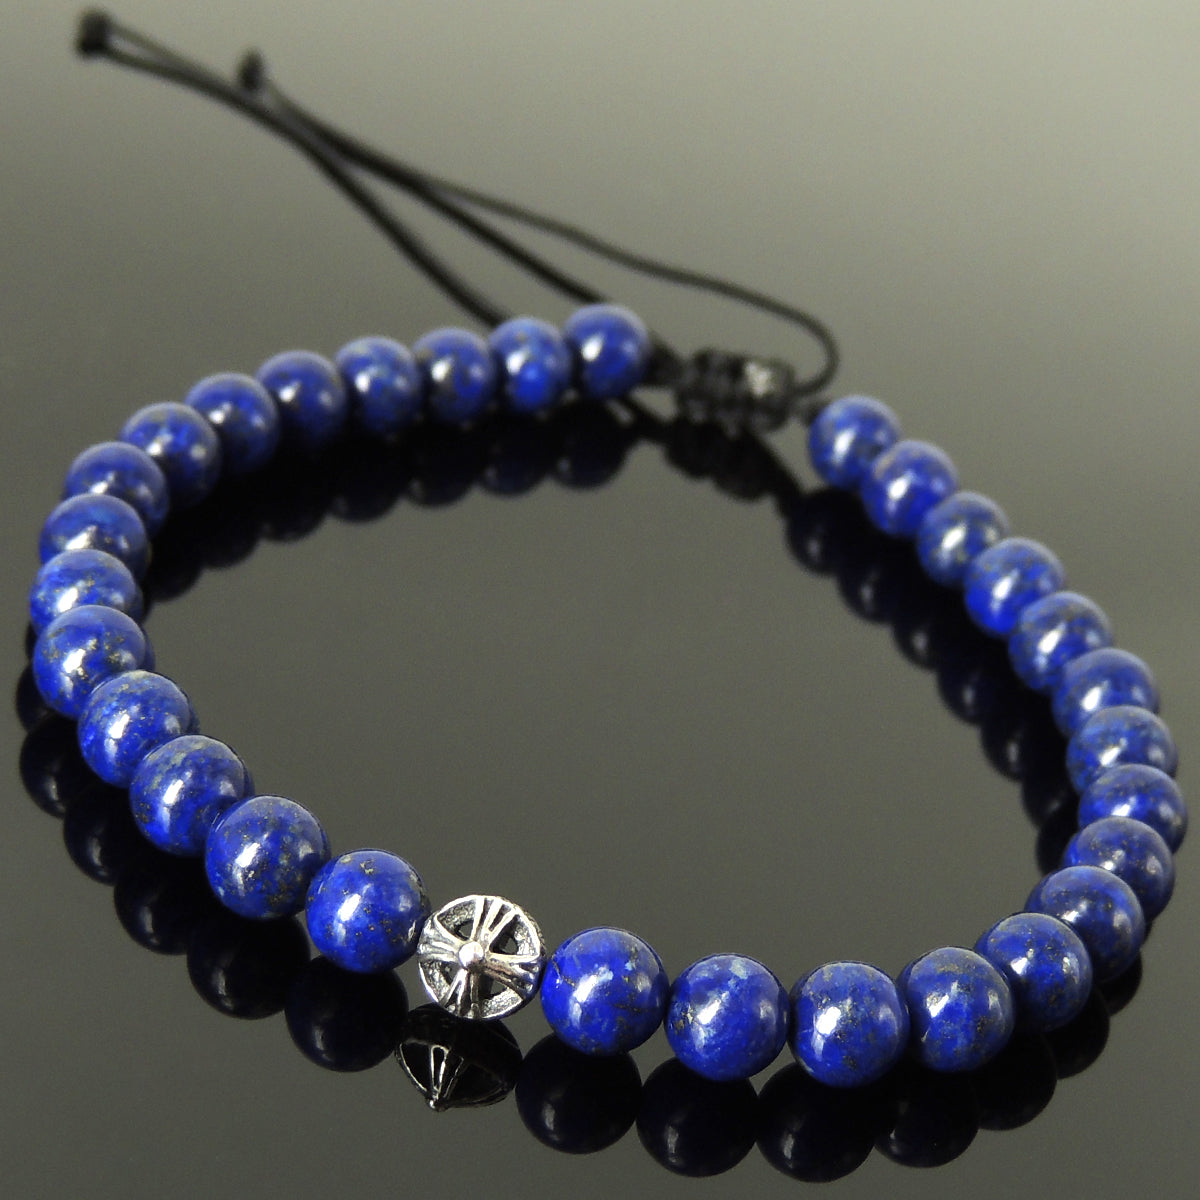 Handmade Braided Celtic Cross Bracelet - Lapis Lazuli 6mm Gemstones, Adjustable Drawstring, S925 Sterling Silver Bead BR1564